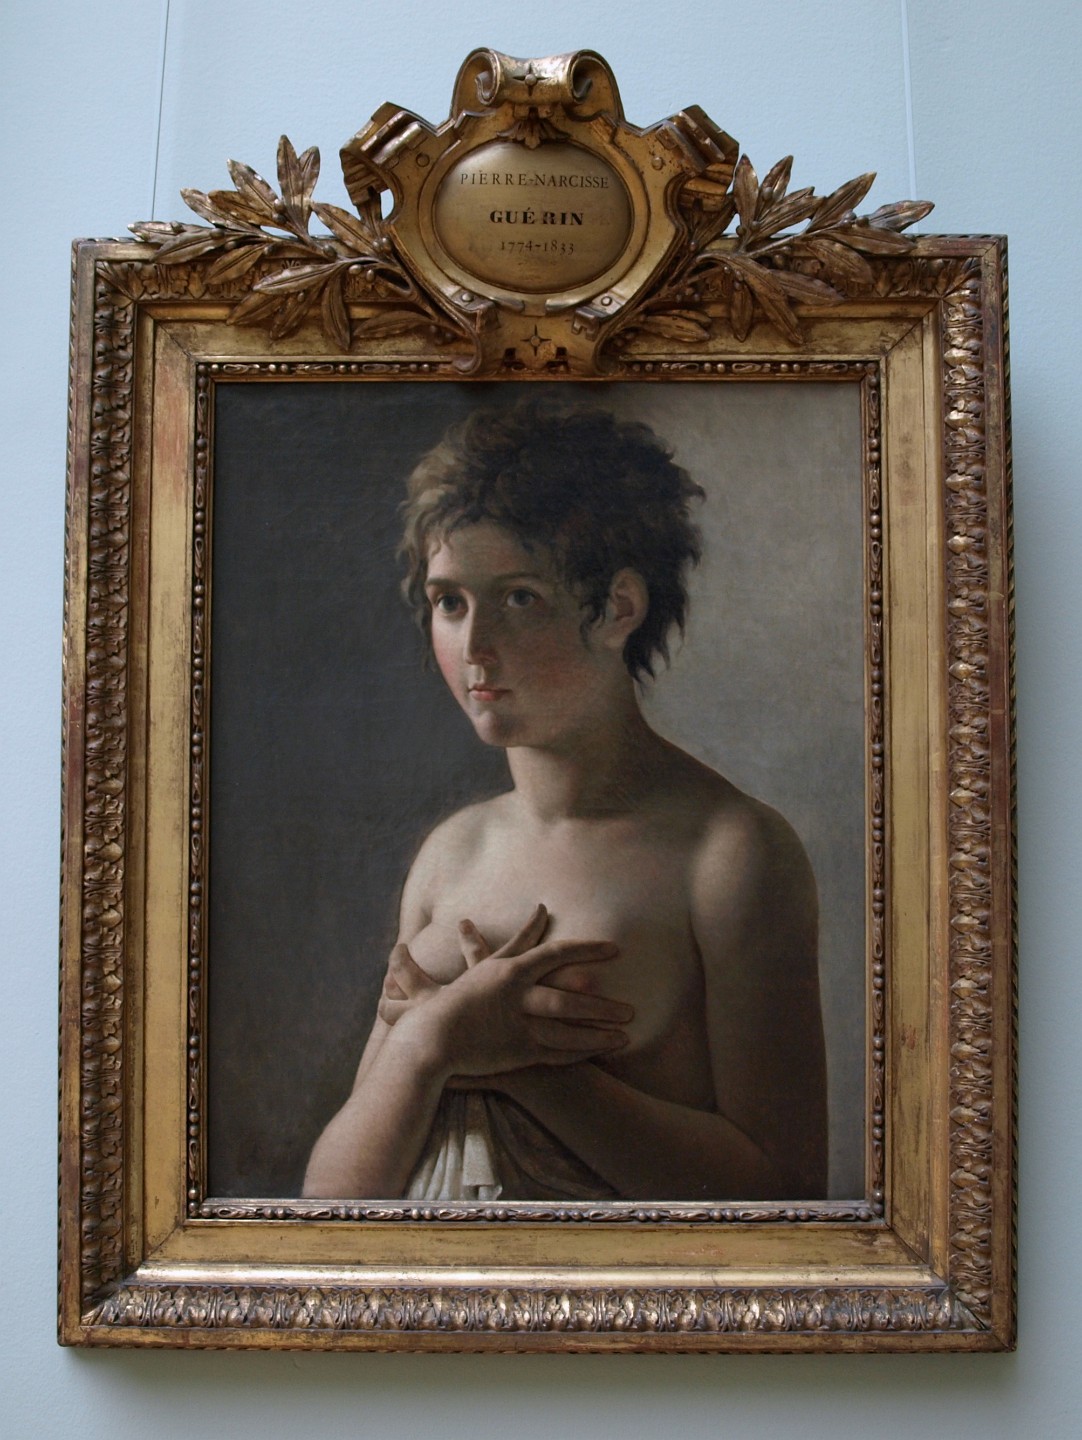 Jeune Fille en Buste by Baron Pierre-Narcisse Guerin